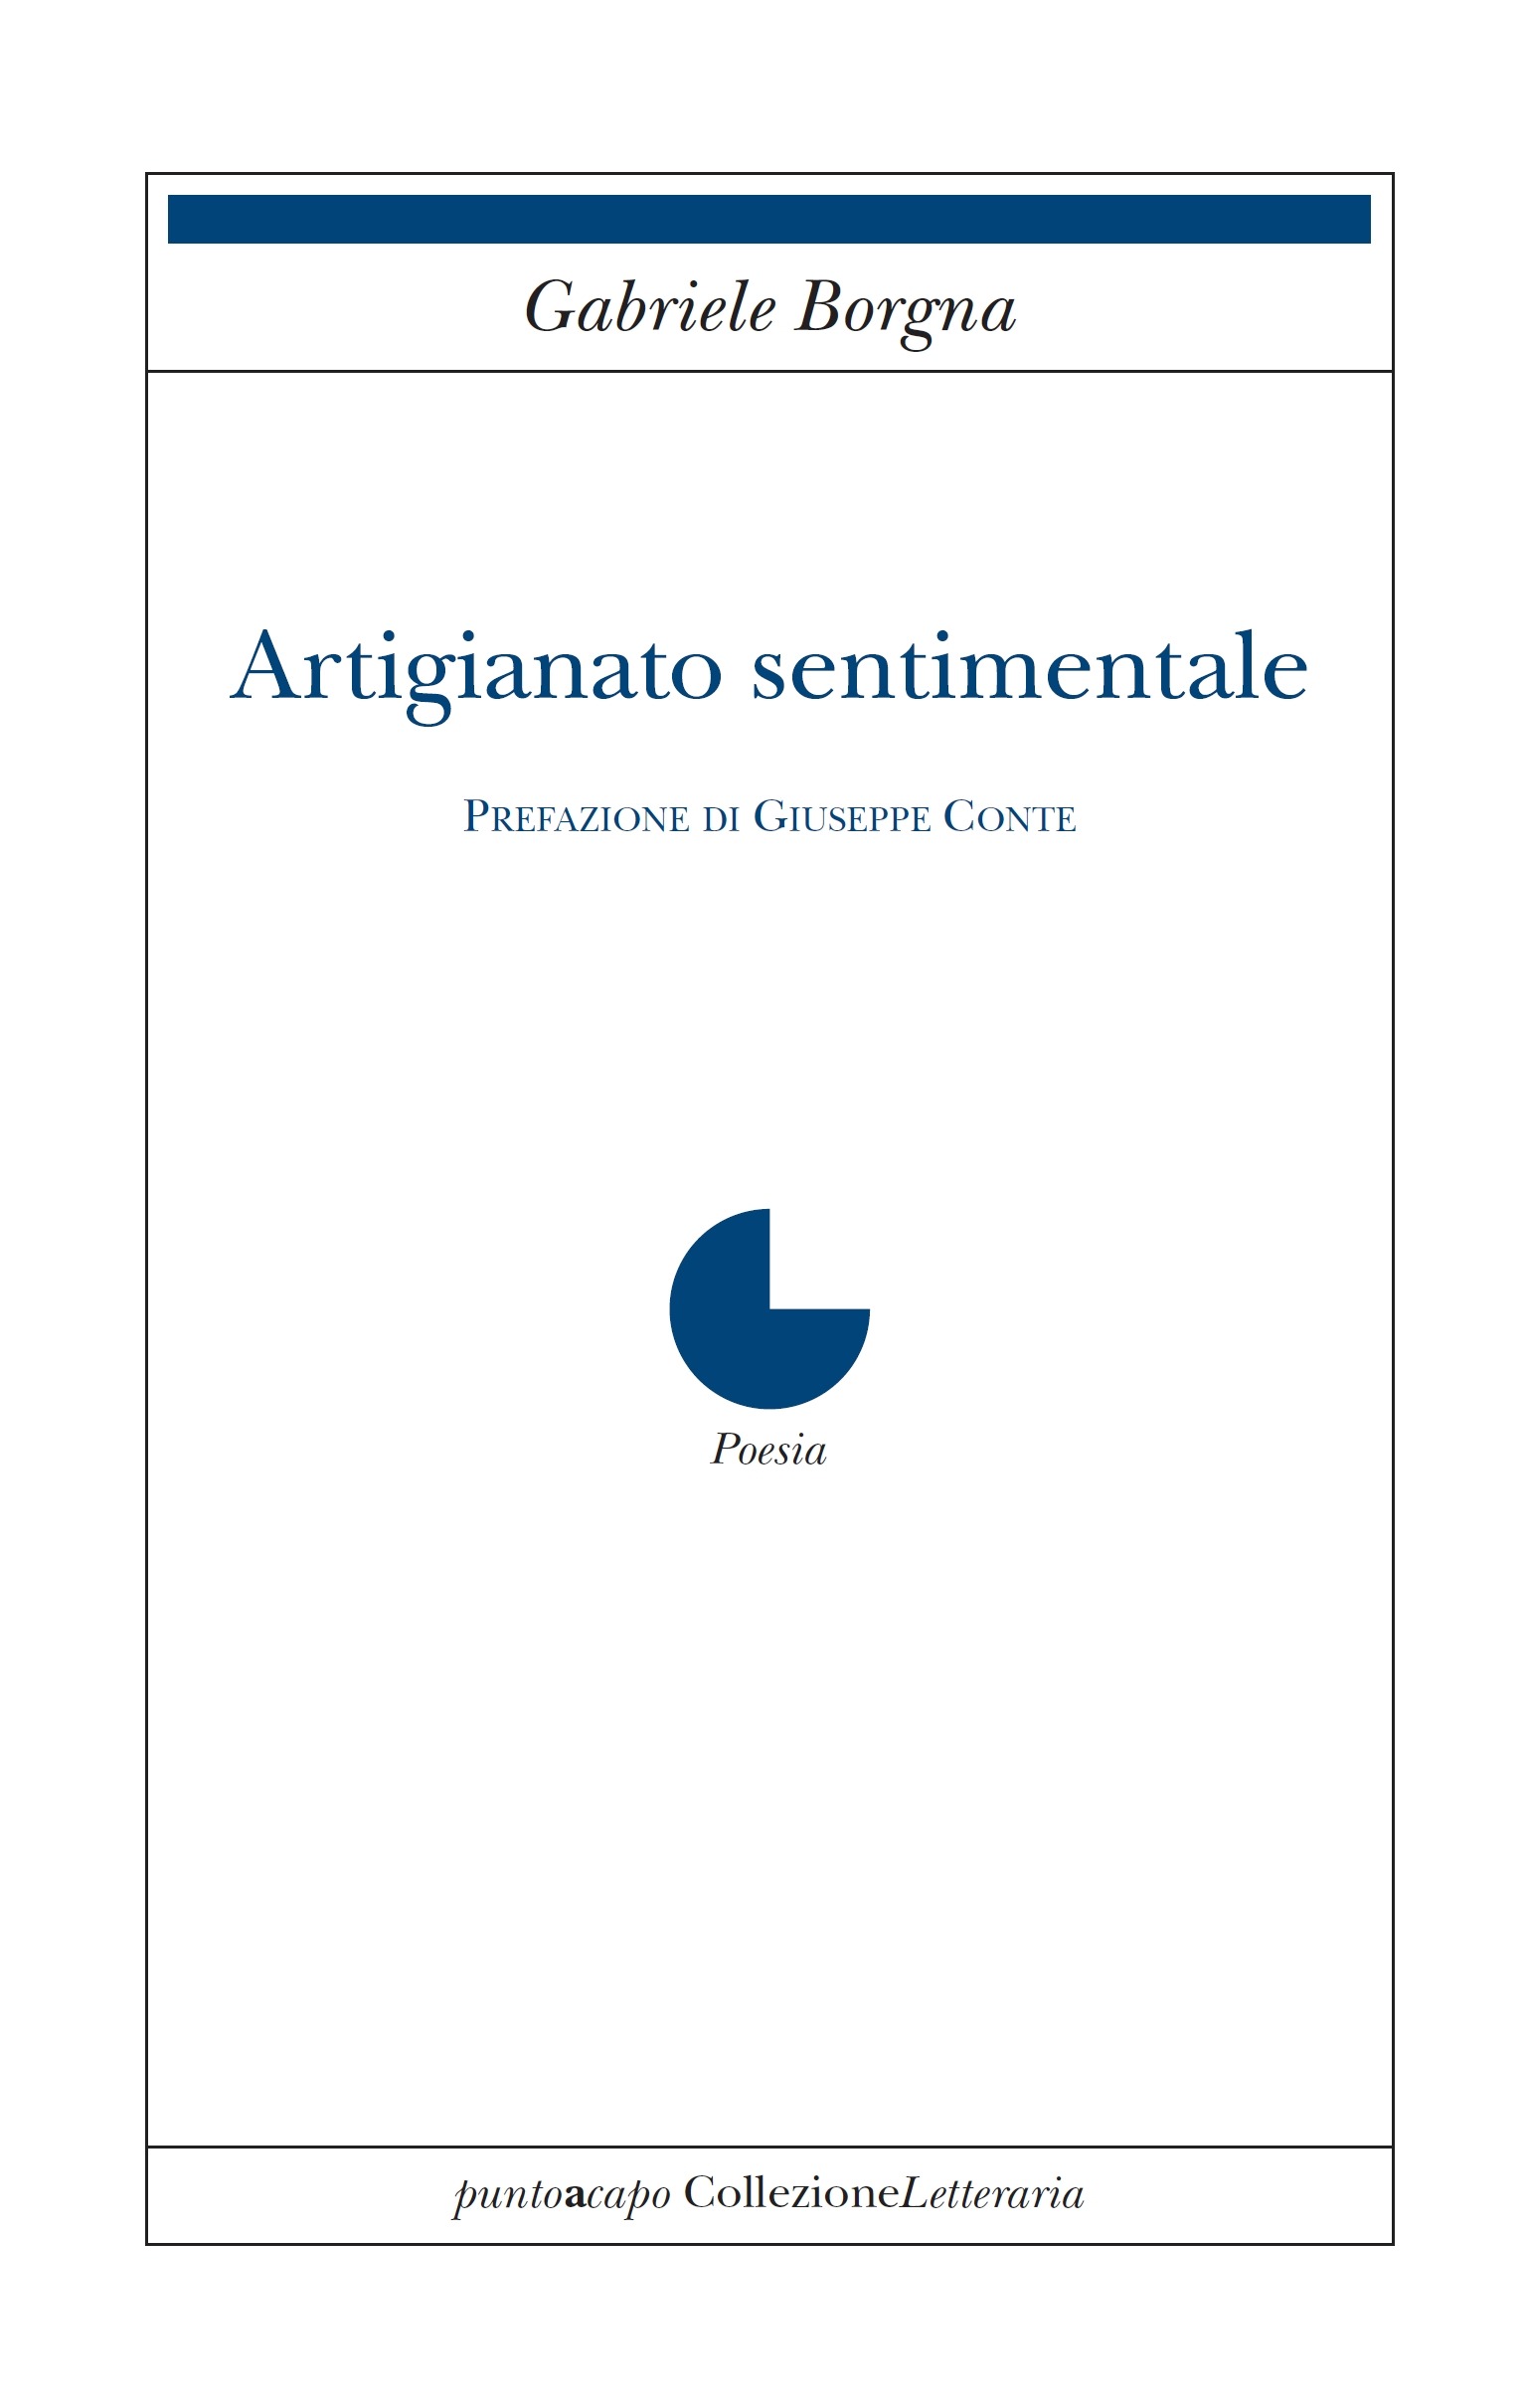 999 Ebook di Narrativa Italiana da scaricare gratis in